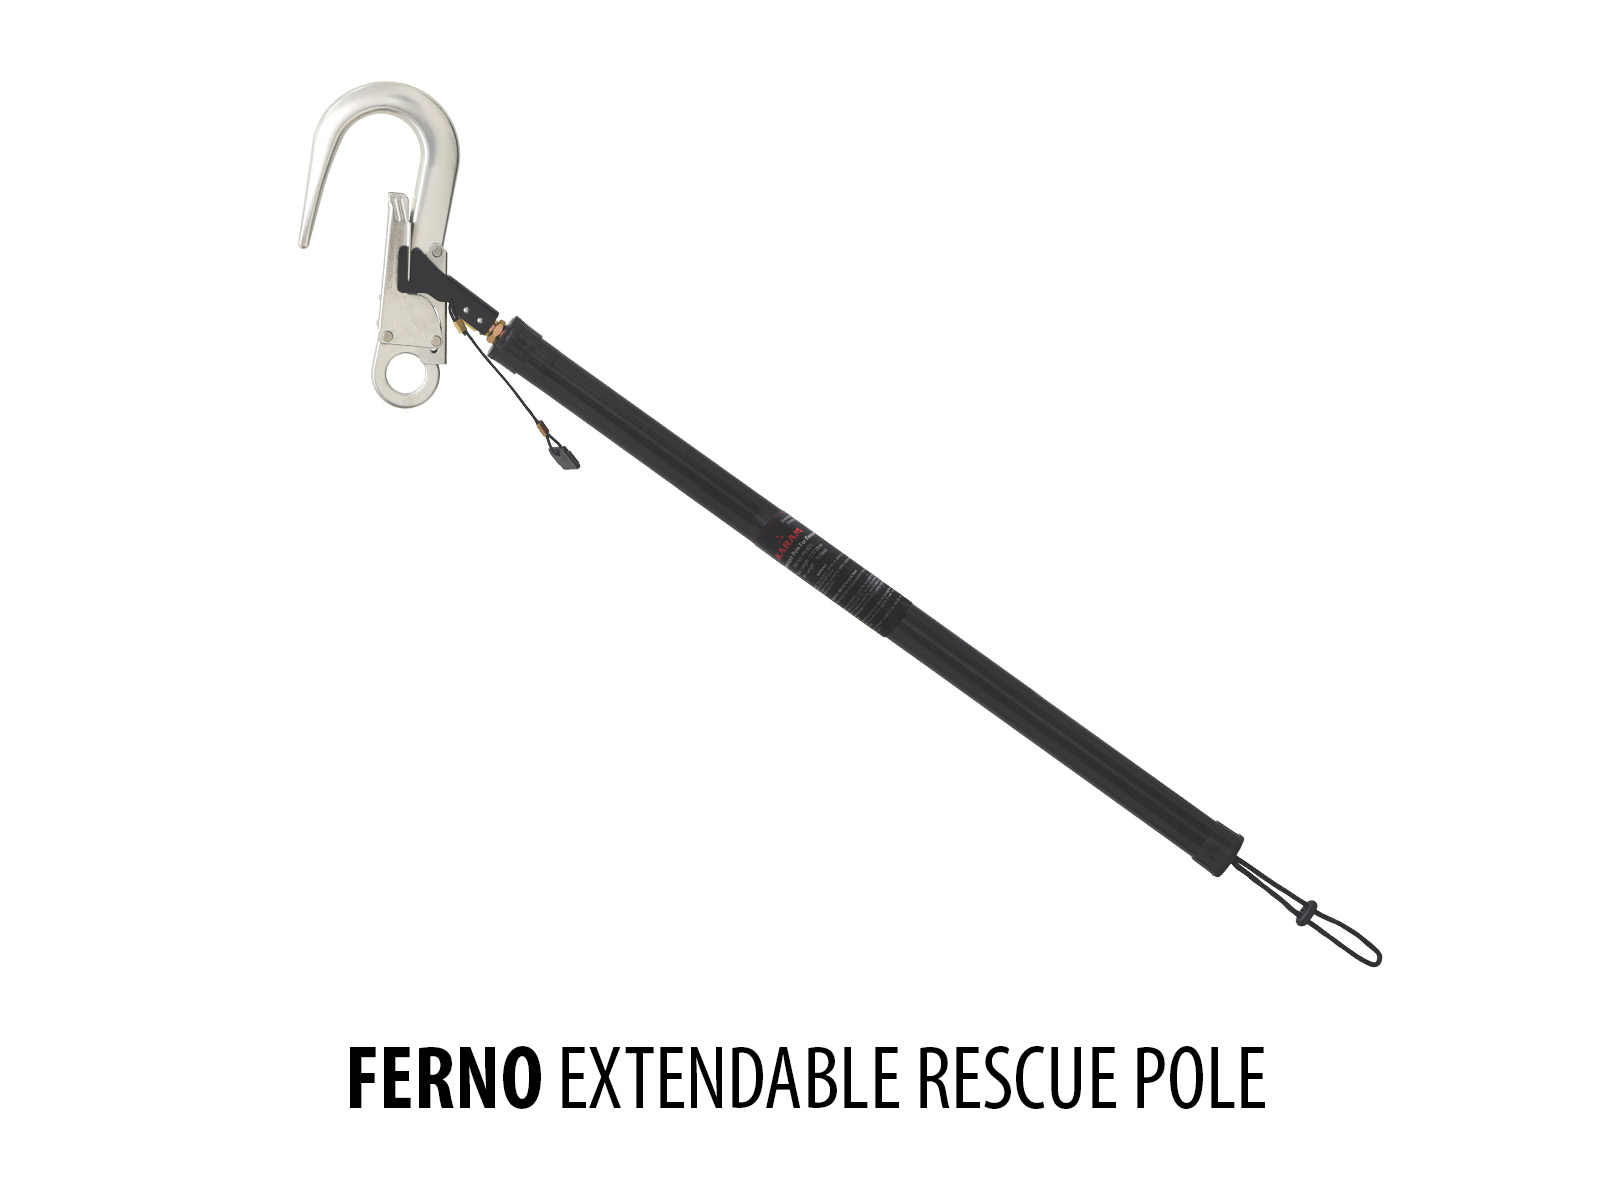 Ferno Extendable Rescue Pole